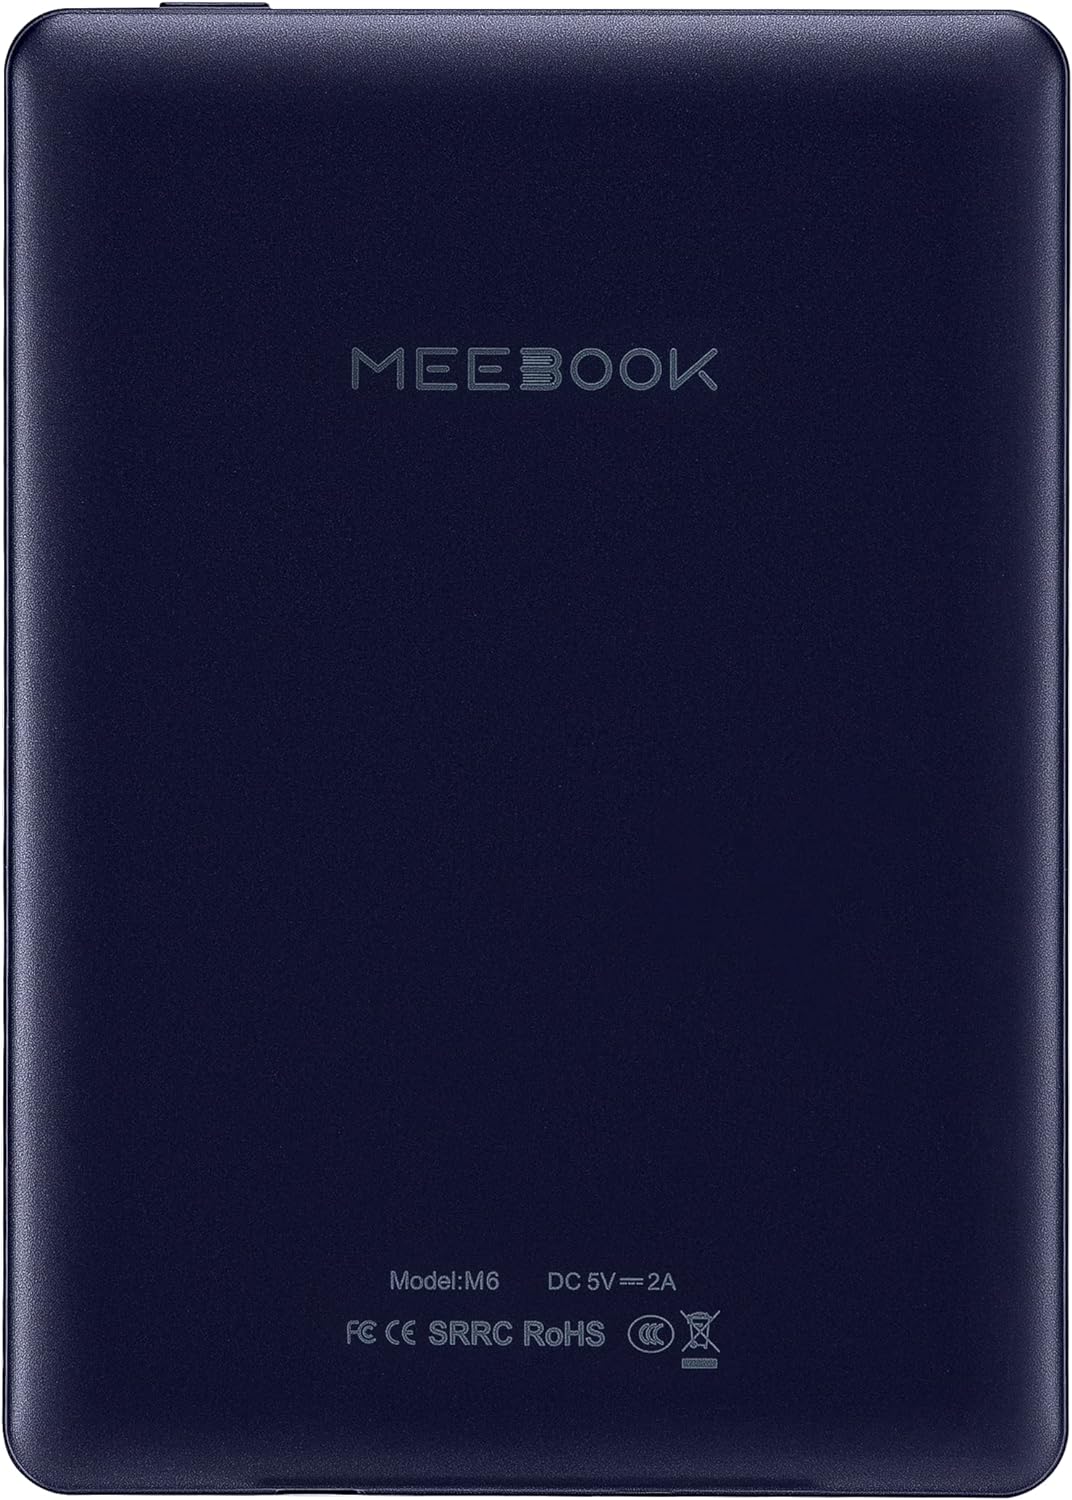 Meebook (likebook) M6, 6インチ e-ink電子書籍リーダー+ポケットサイズ+クアッドコア1.8 Ghzプロセッサ + 3GB RAM+ 32GB 内部ストレージ、Android 11、Wifi、Blutooth、Micro SDカードスロット【電子書籍リーダー本体+ オリジナルレザーケース】 パープル+ブラック